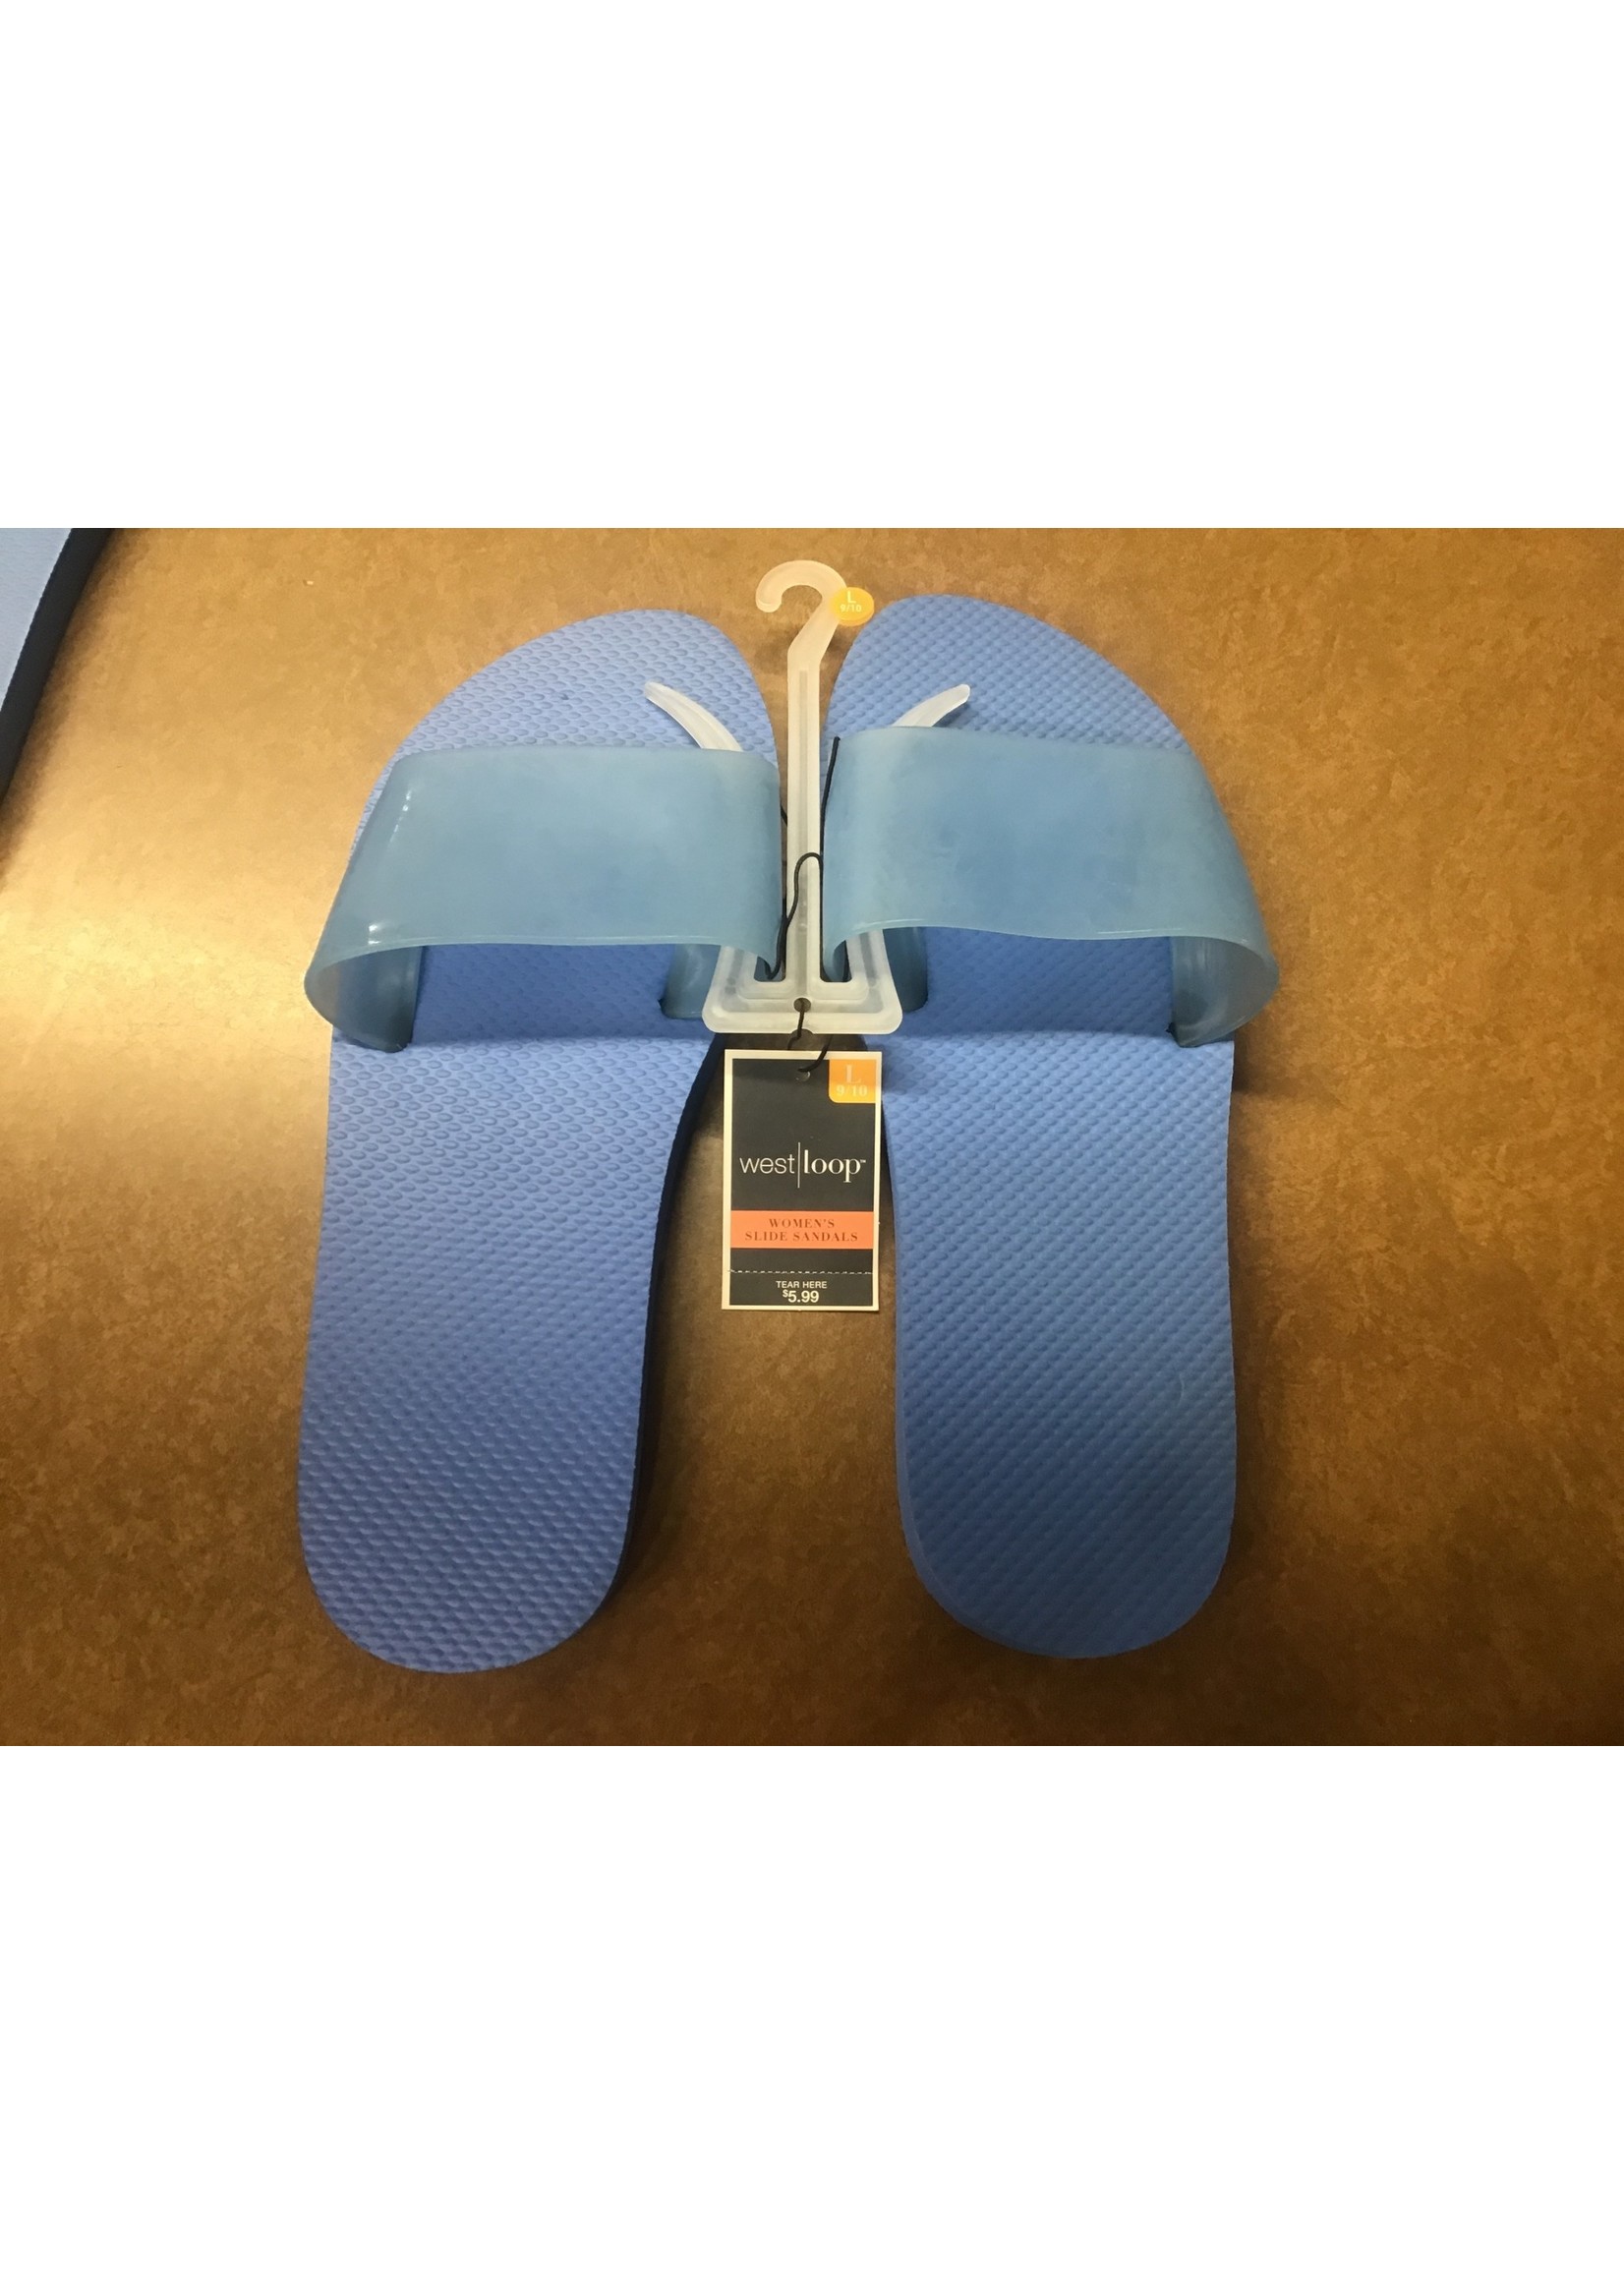 West loop Women’s Slide Sandals blue L (9/10)